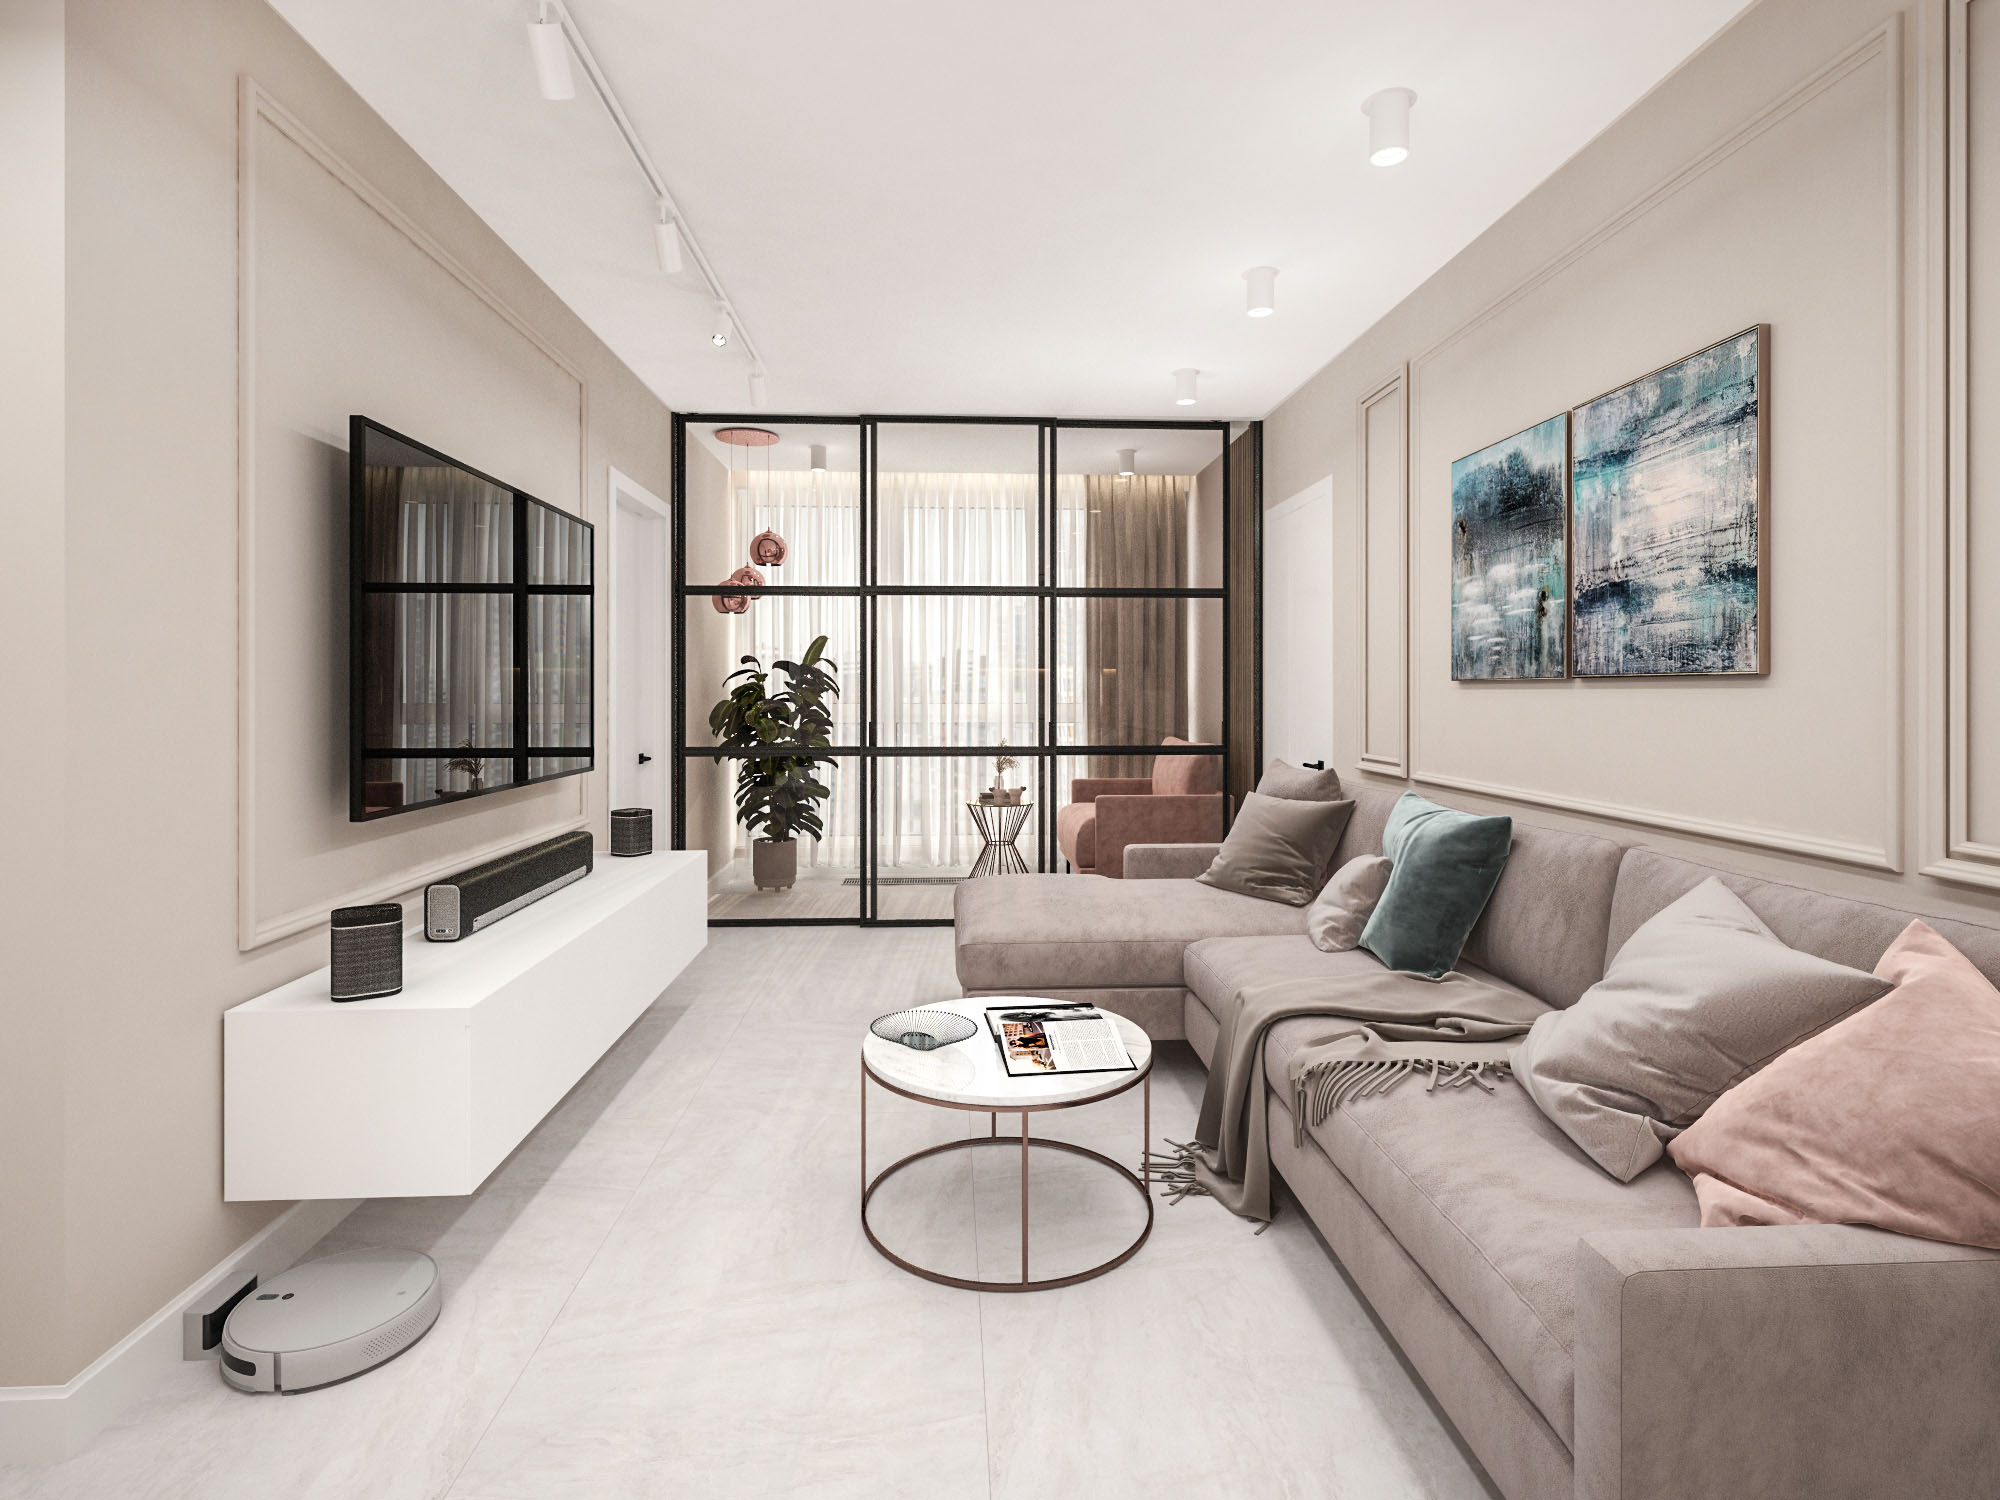 Дизайн проект квартиры в Минске ✔ Услуги дизайн интерьера квартиры ✔ Цена дизайна квартиры